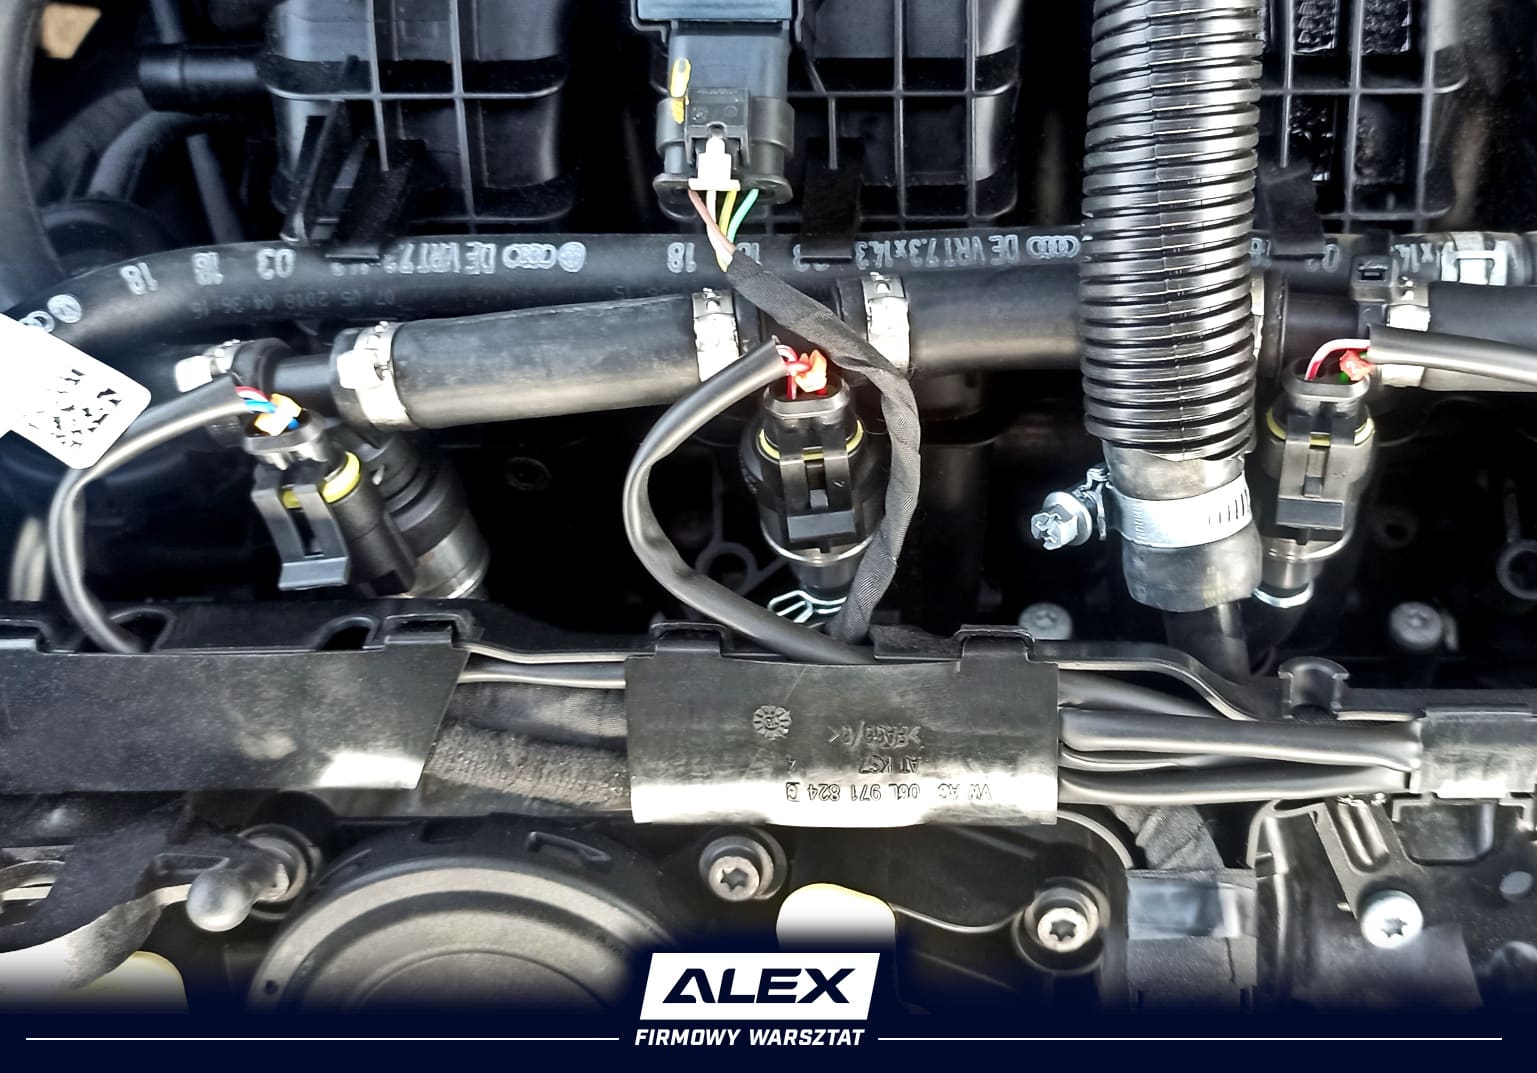 Skoda Octavia RS - fast and discreet liftback with an LPG system - ALEX LPG